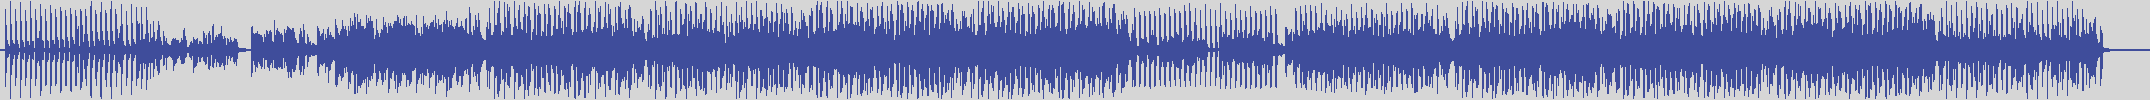 nf_boyz_records [NFY077] Deep Mind - Kaleidoscope [Basement House Mix] audio wave form